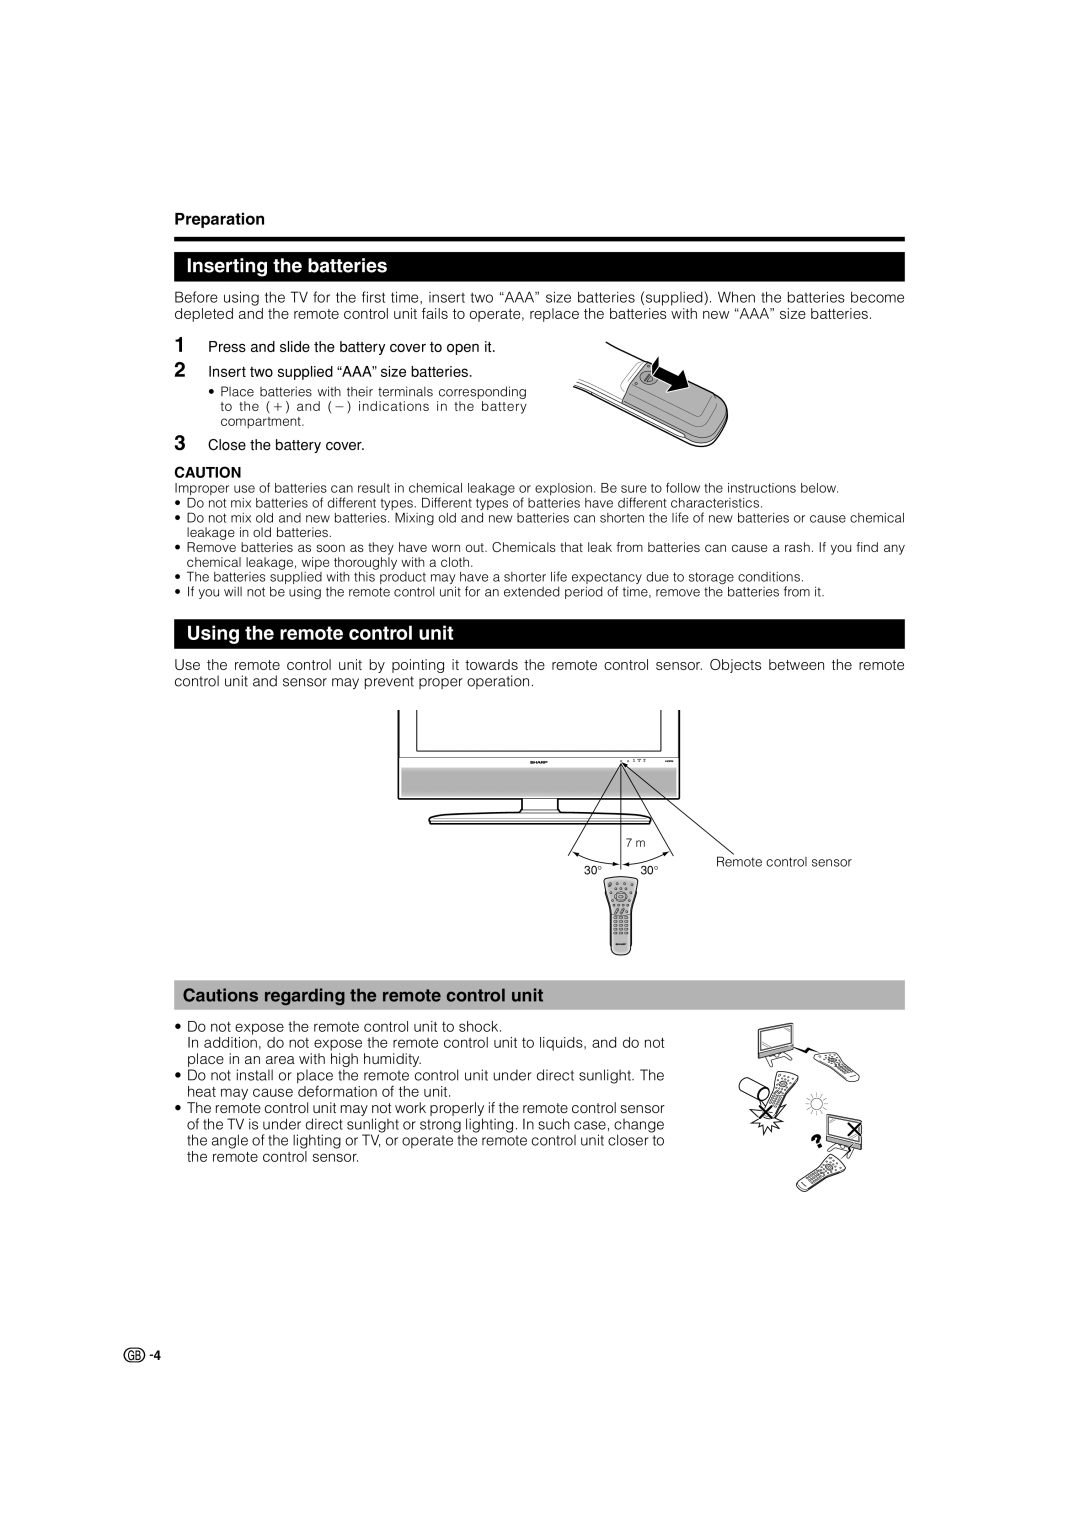 Sharp LC-32P50E Inserting the batteries, Using the remote control unit, Cautions regarding the remote control unit 